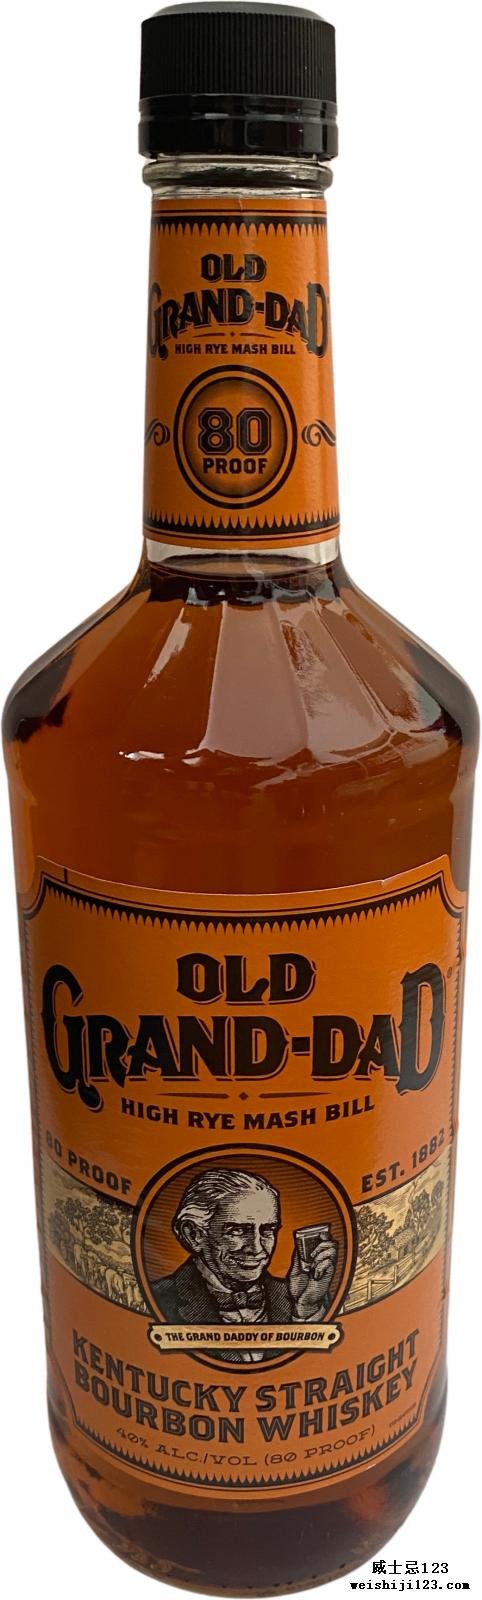 Old Grand-Dad Kentucky Straight Bourbon